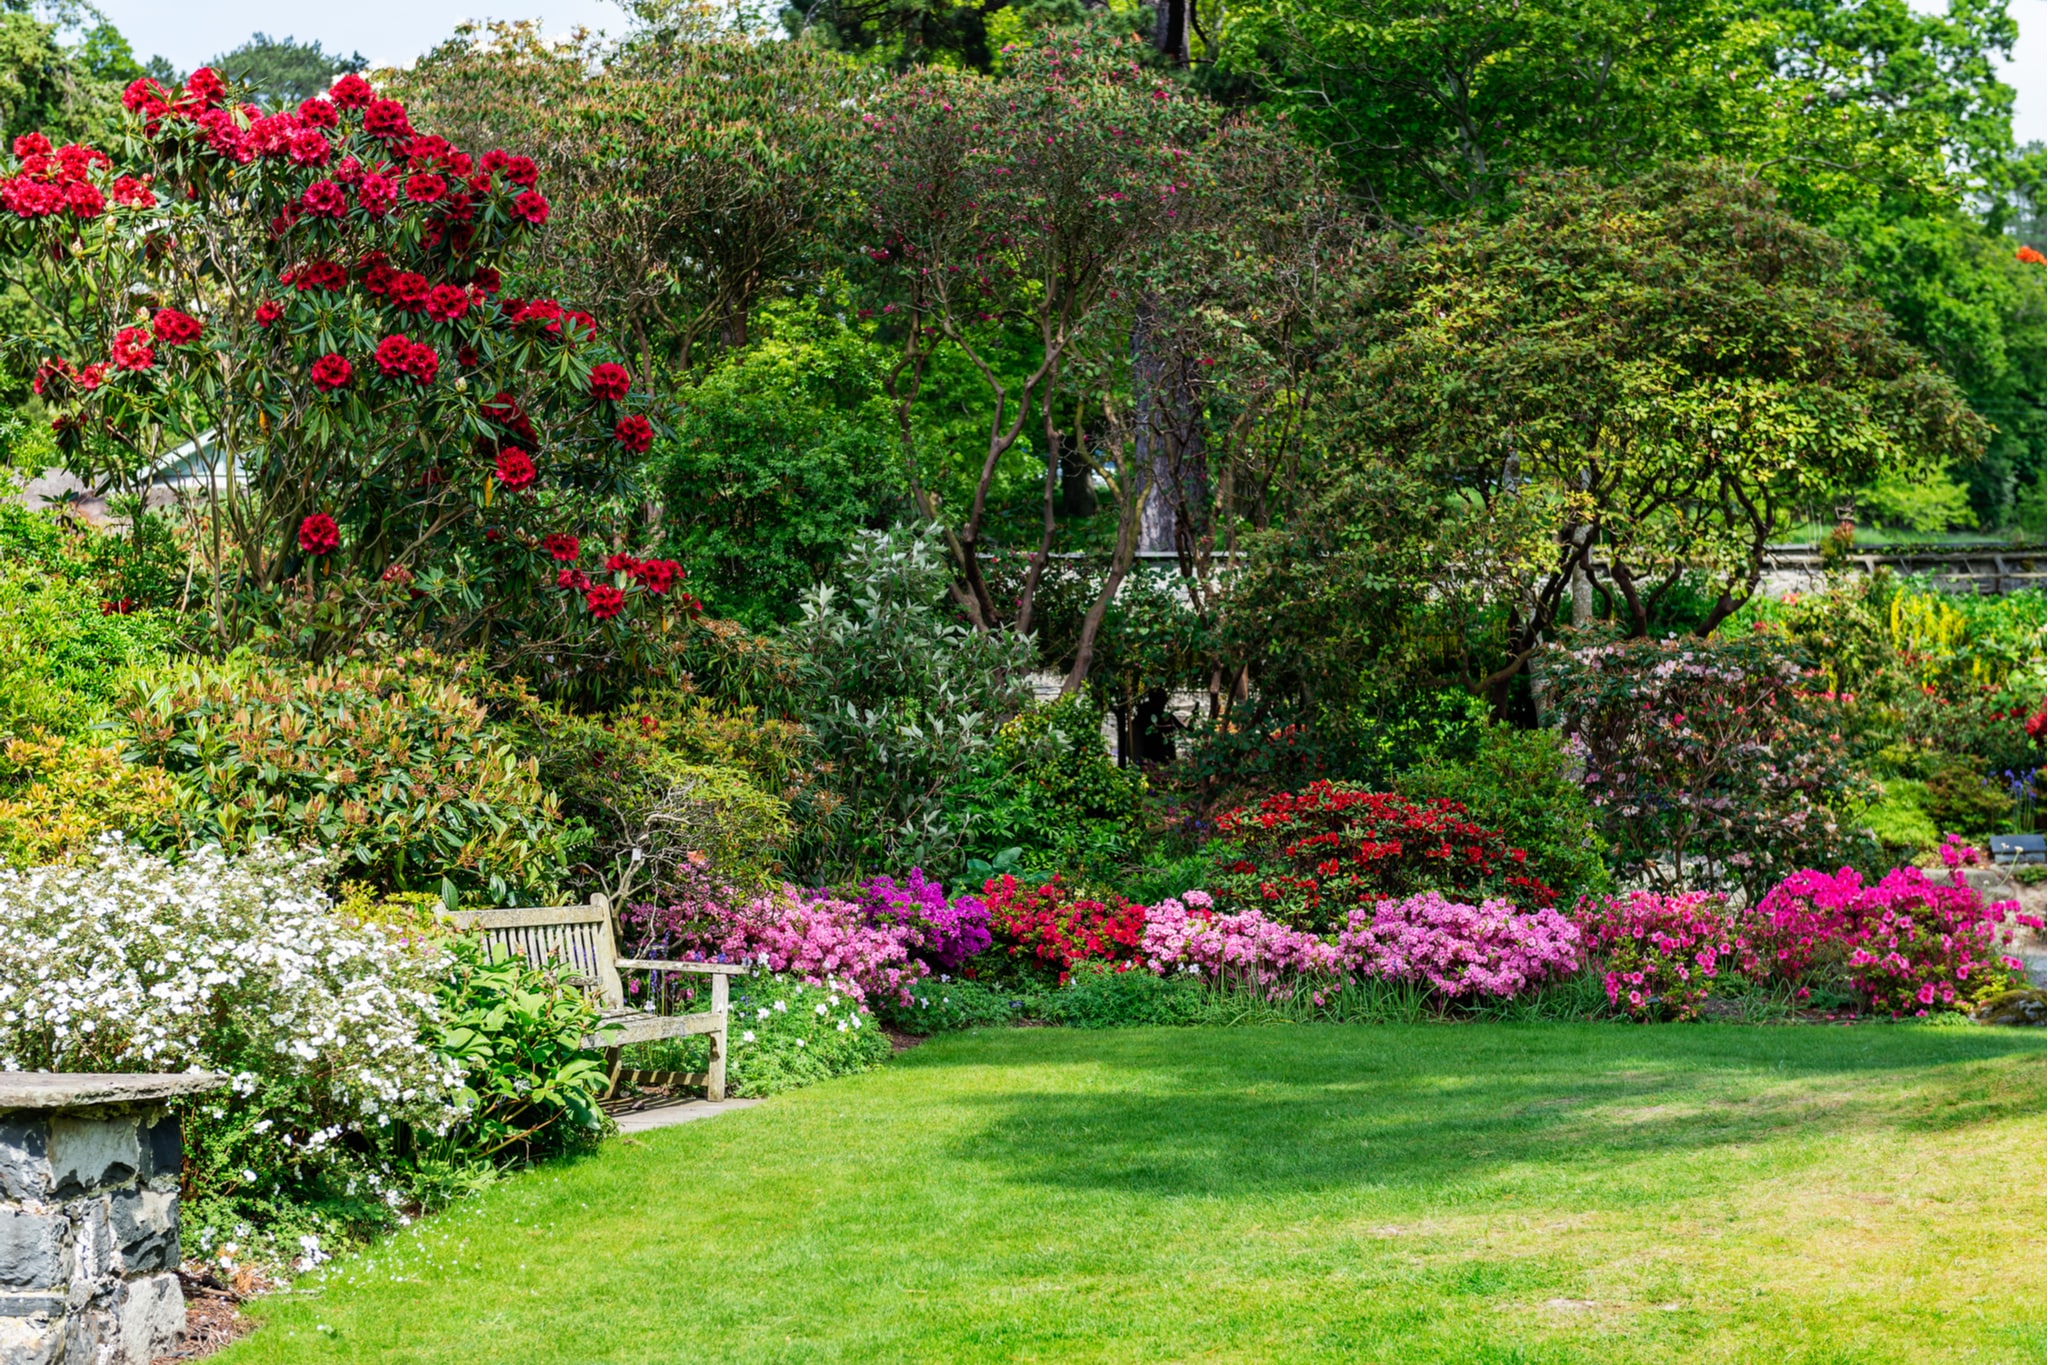 10 brilliant ways to get your garden looking spectacular for summer